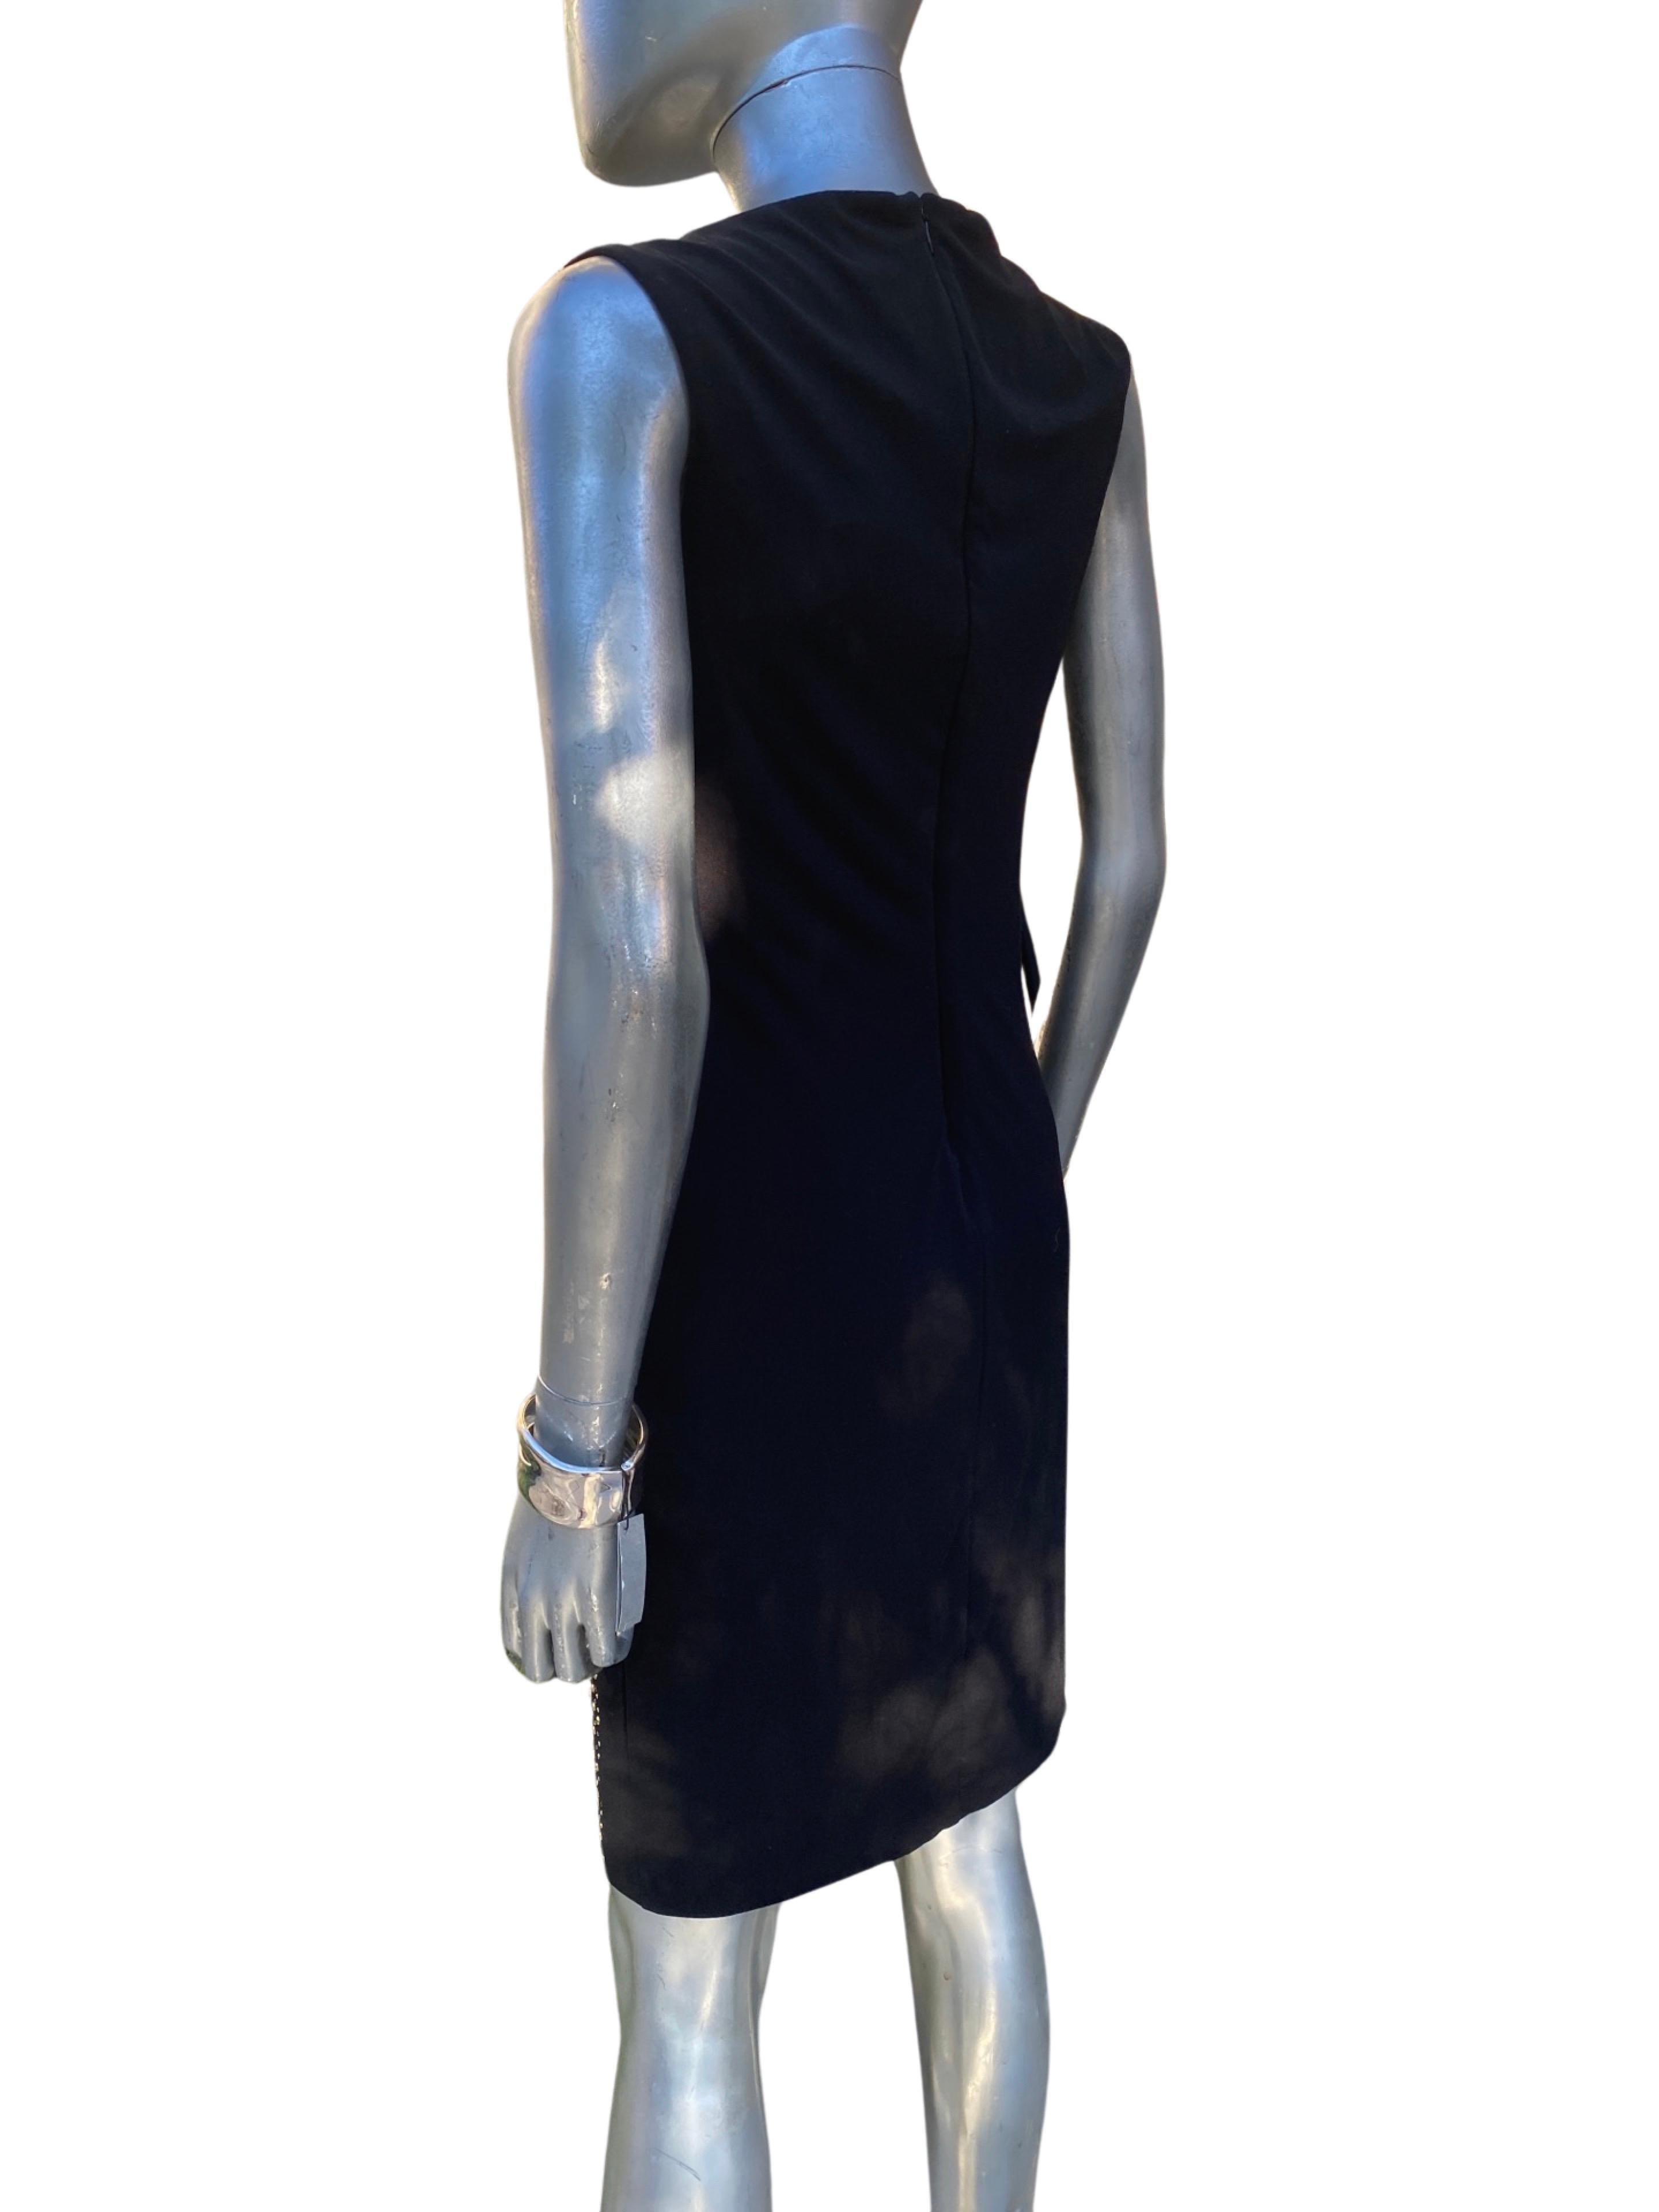 Carmen by Carmen Marc Valvo Black Jersey Sleeveless Embellished Dress Size Small For Sale 3